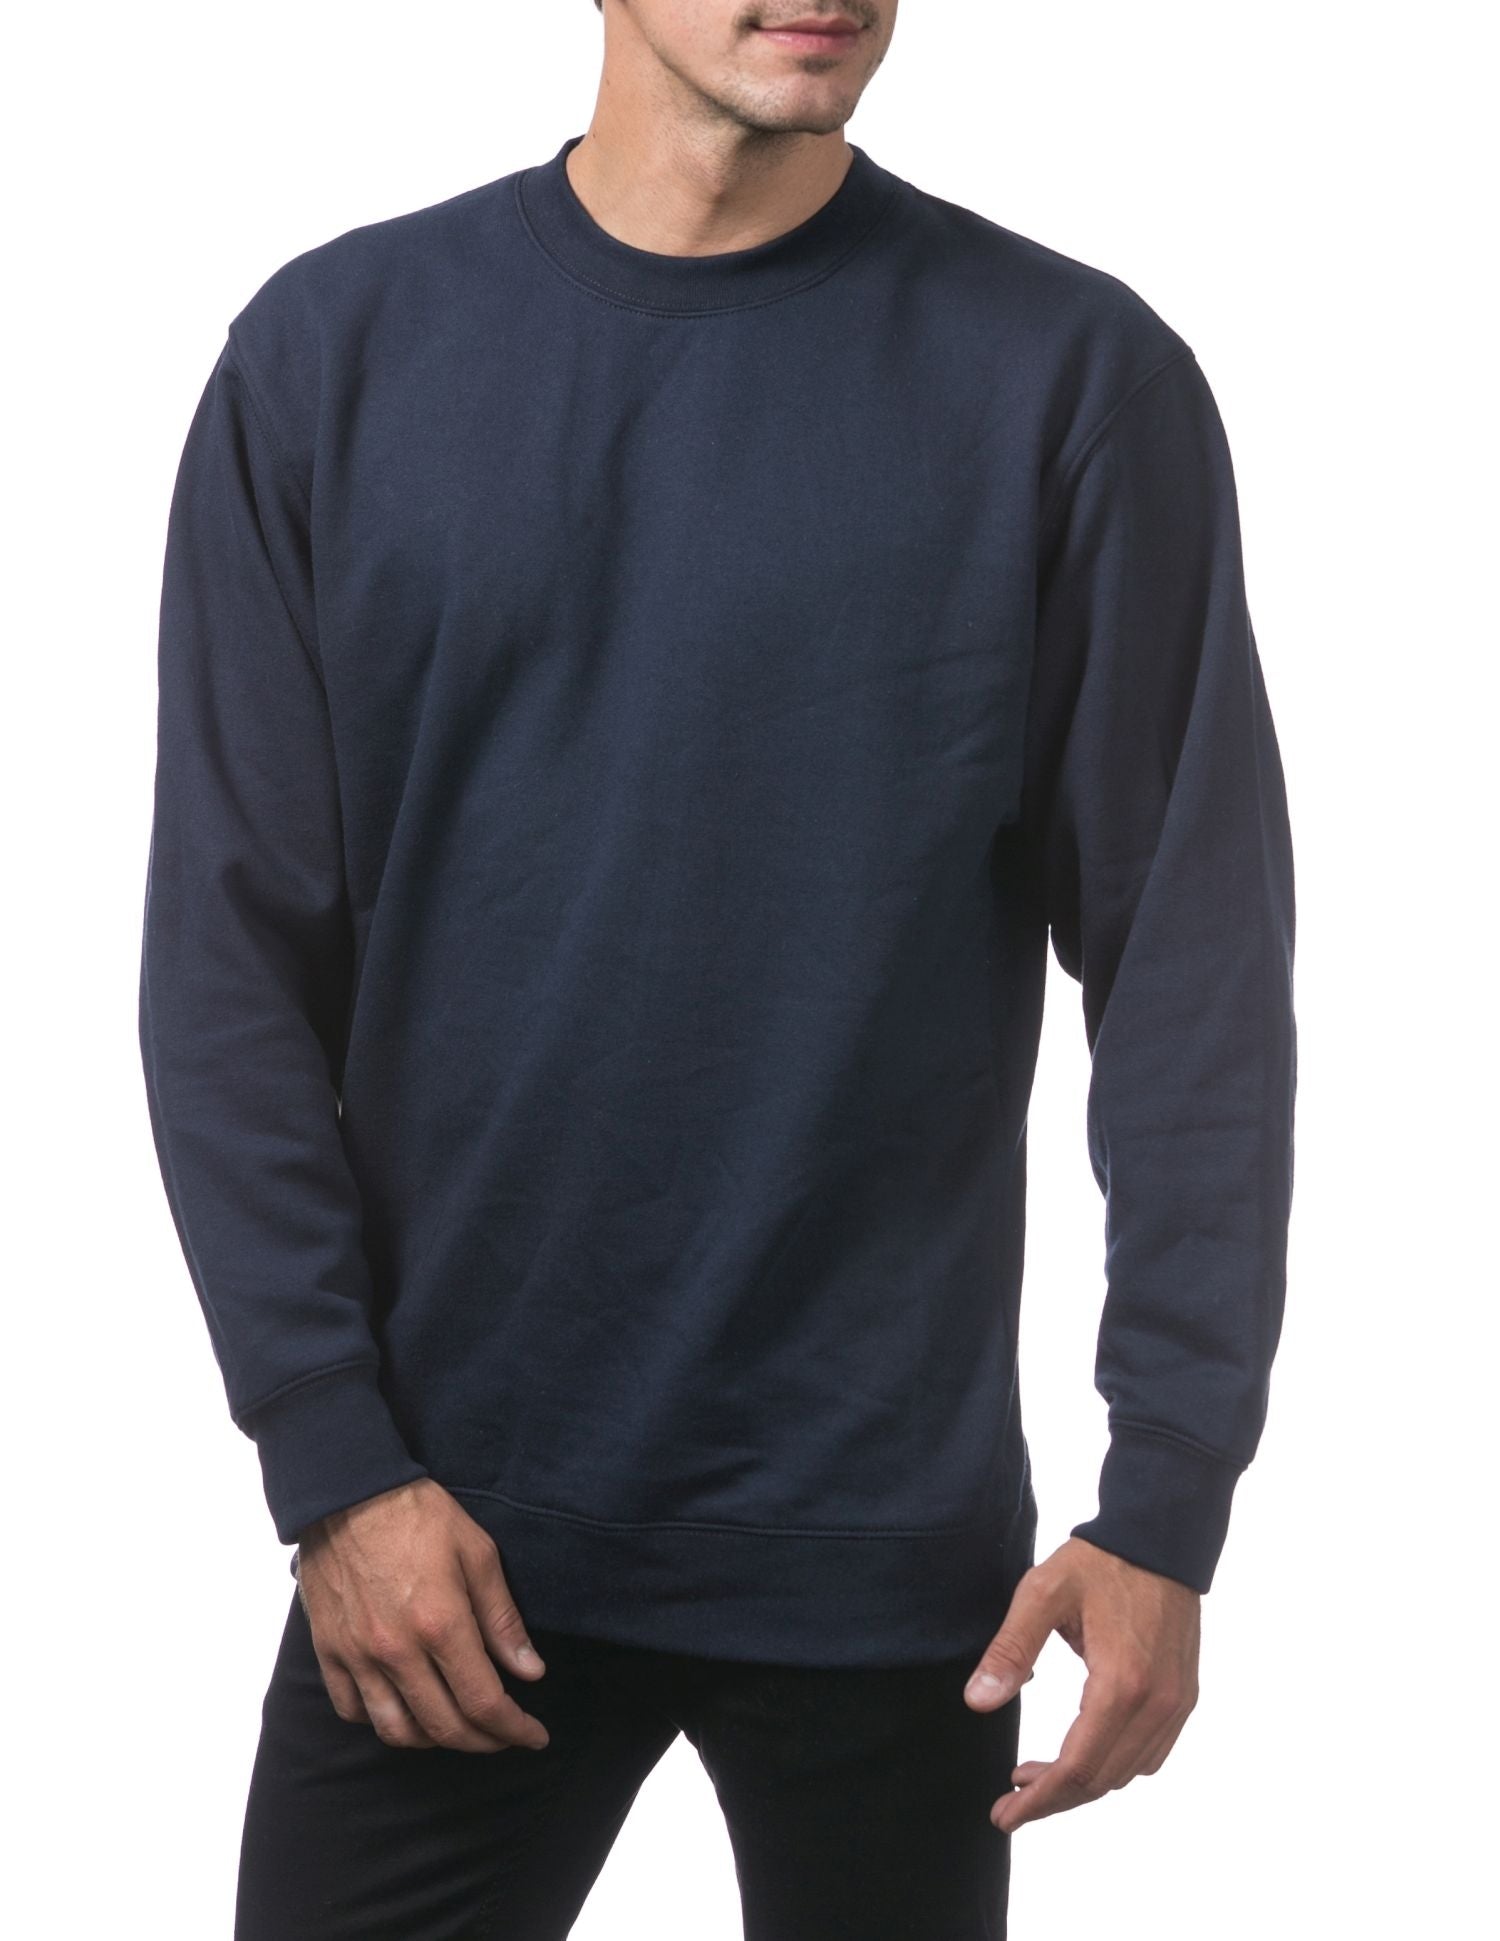 Pro Club Men's Comfort Crew Neck Fleece Pullover Sweater - Navy - Small - Pro-Distributing